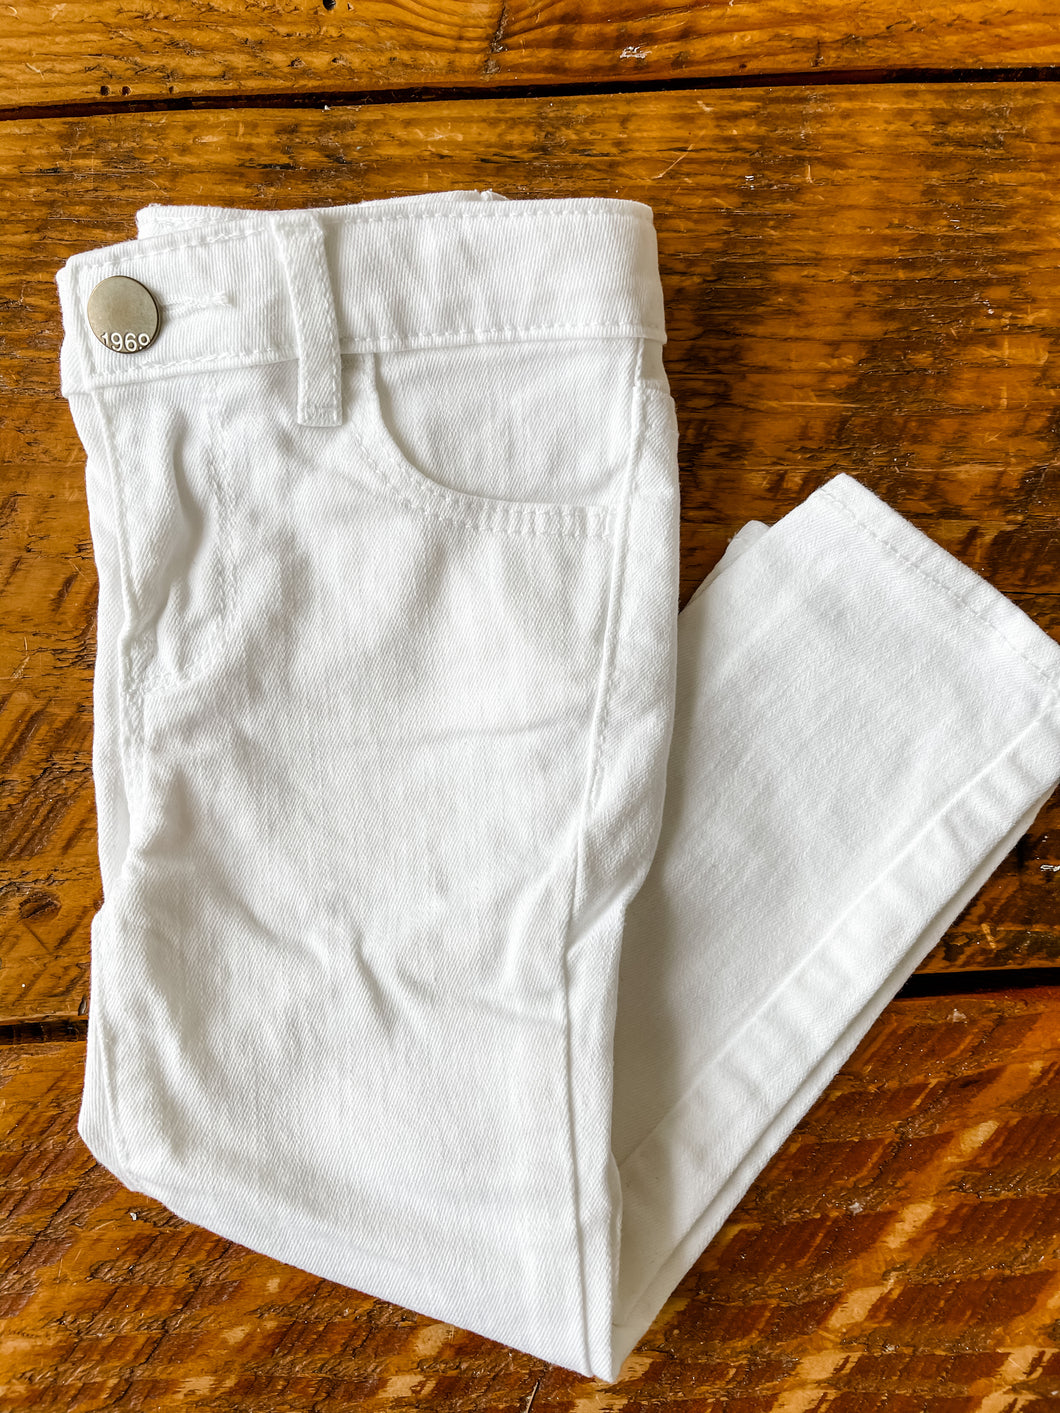 White Gap Jeans Size 2T